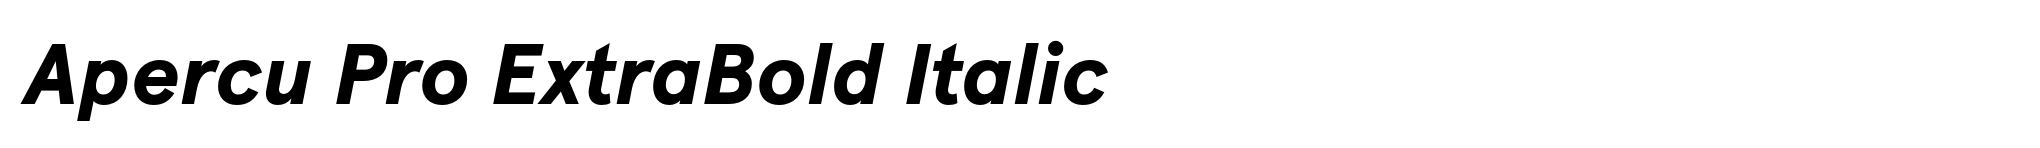 Apercu Pro ExtraBold Italic image